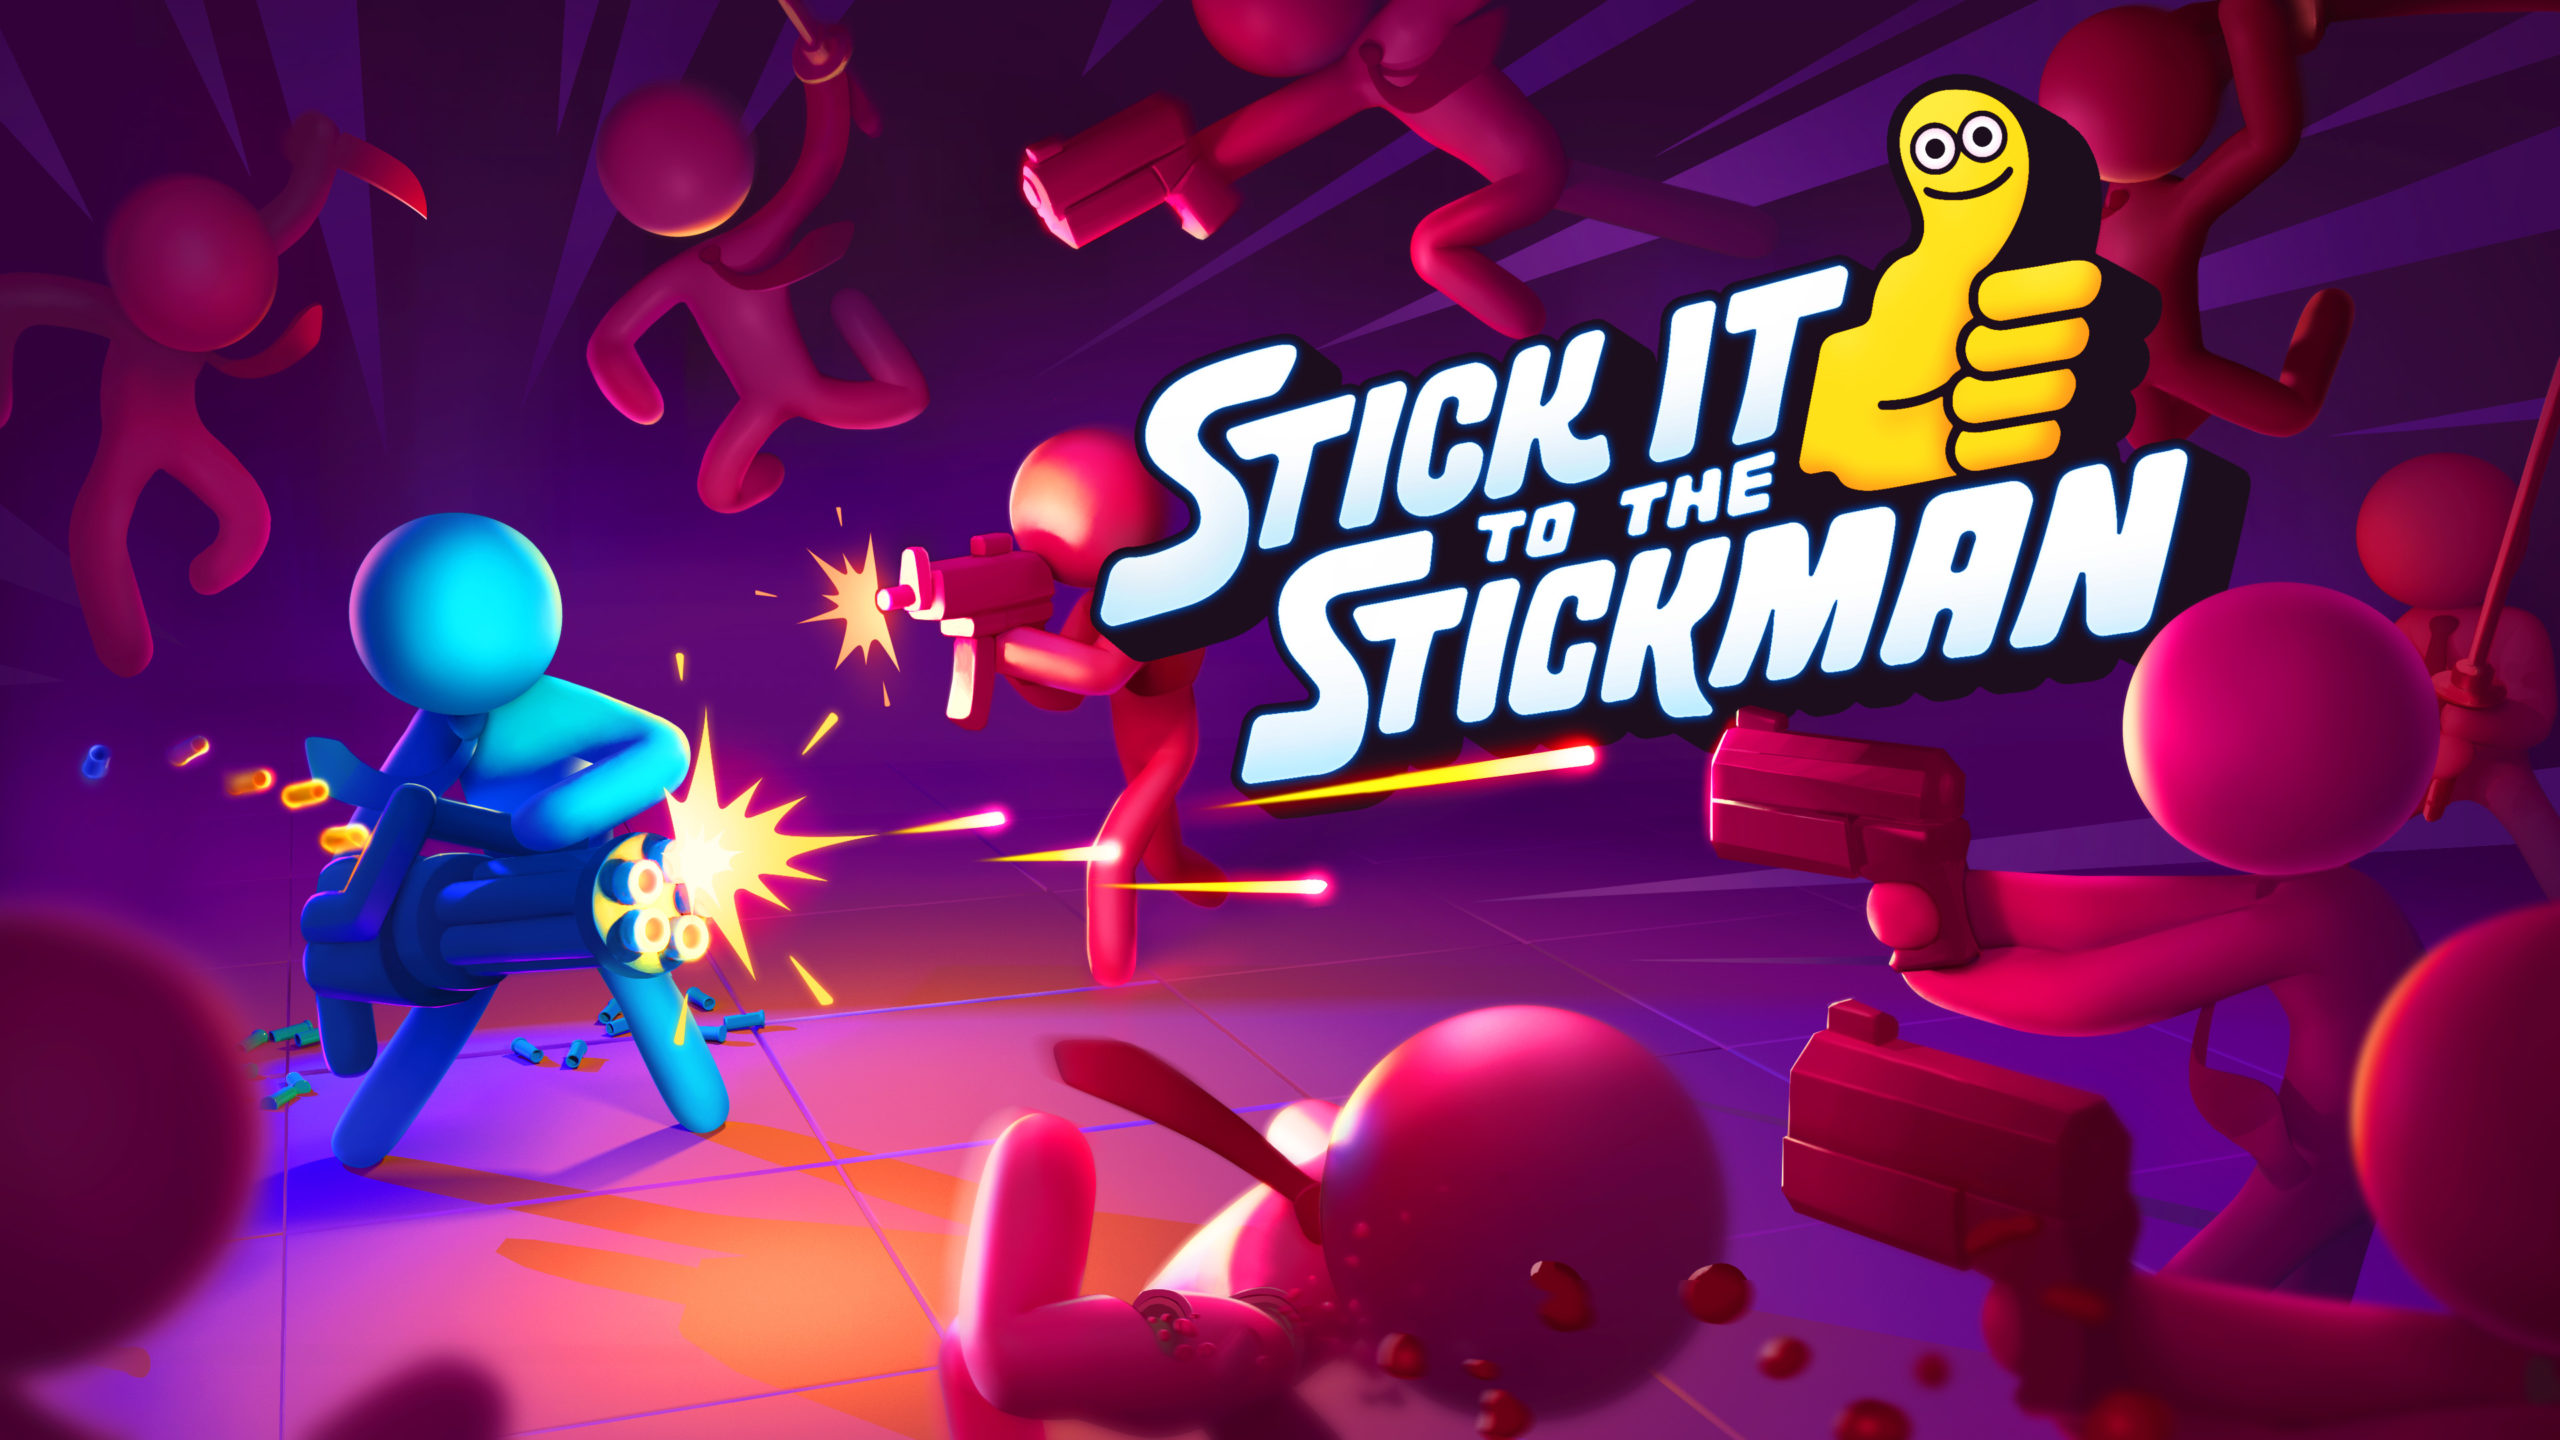 Game stick как называется. Stick it to the Stick man. Stick to the Stickman. Игра Stick it to the man. Stick it the Stickman.